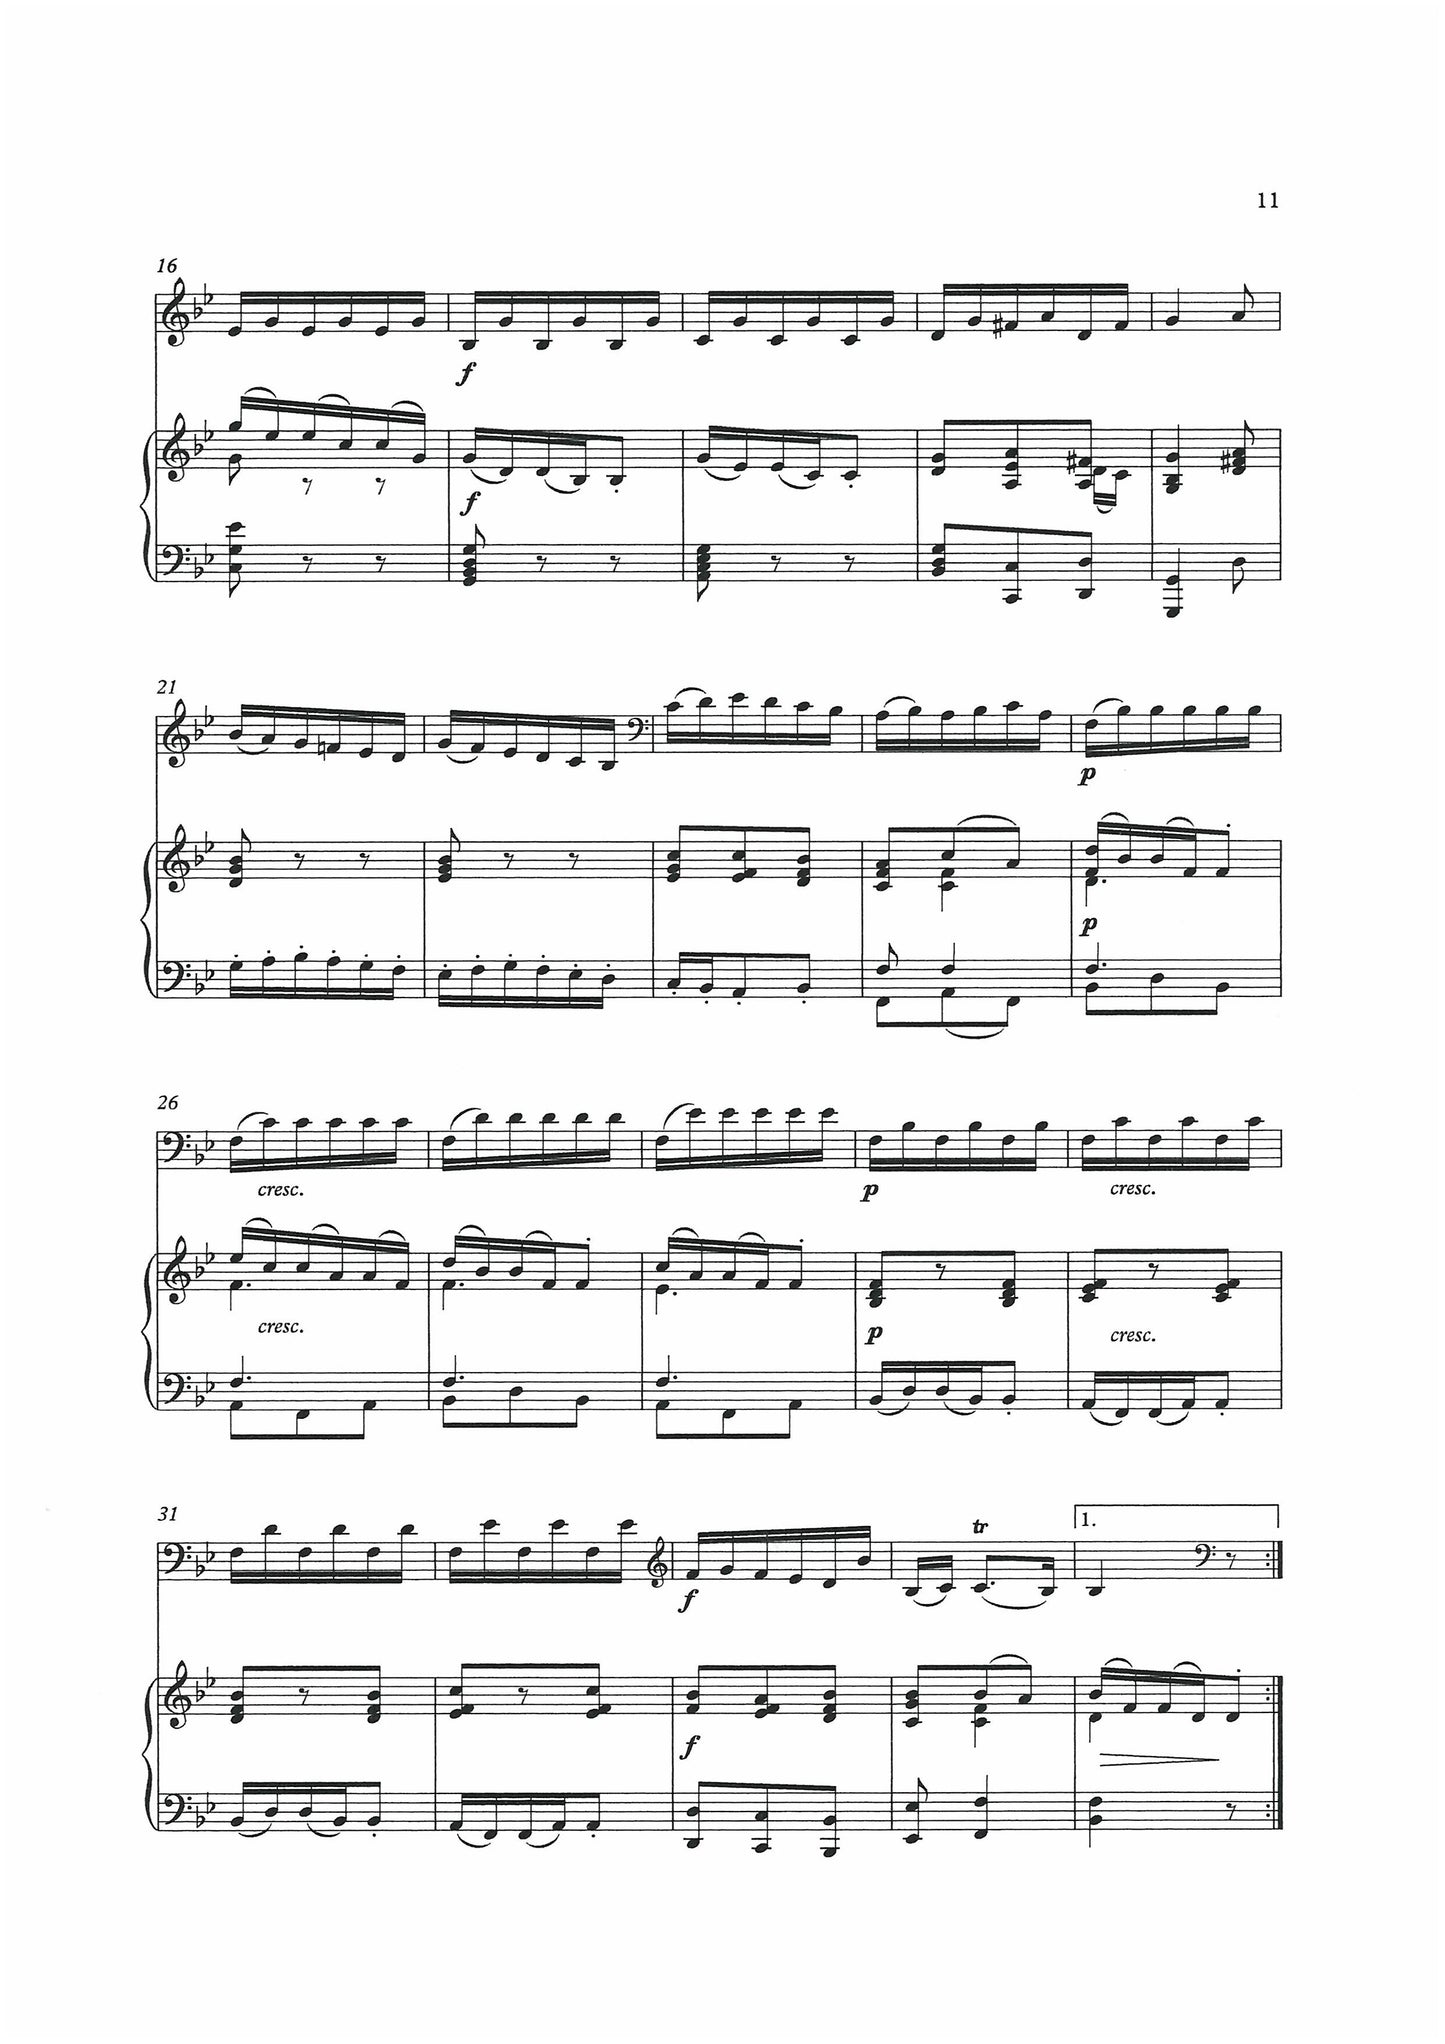 Henry Eccles: Sonata in G minor for double bass & piano (ed. David Heyes)